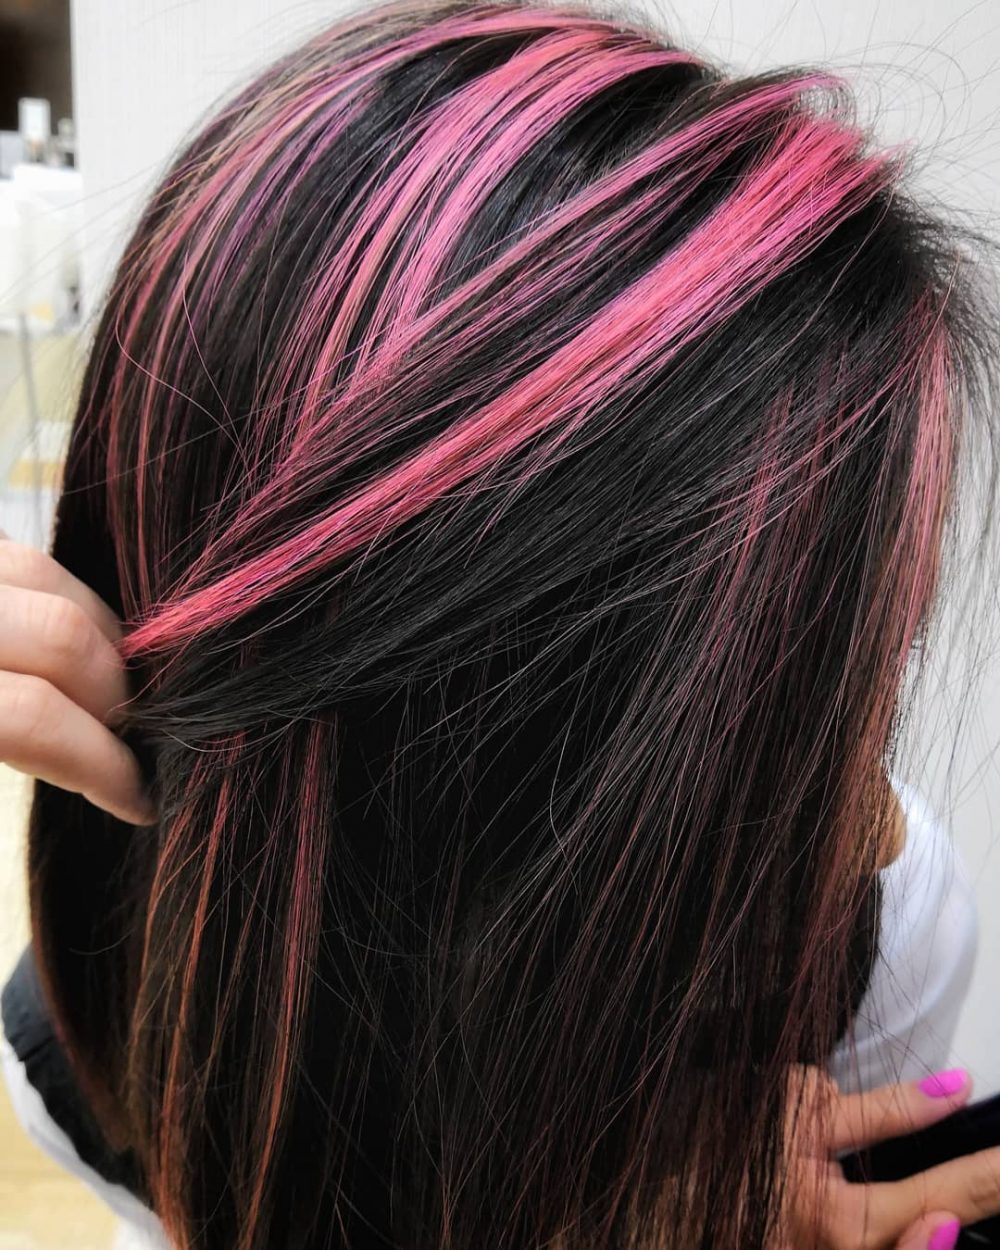 Straight Black Hair amongst Pink Highlights.